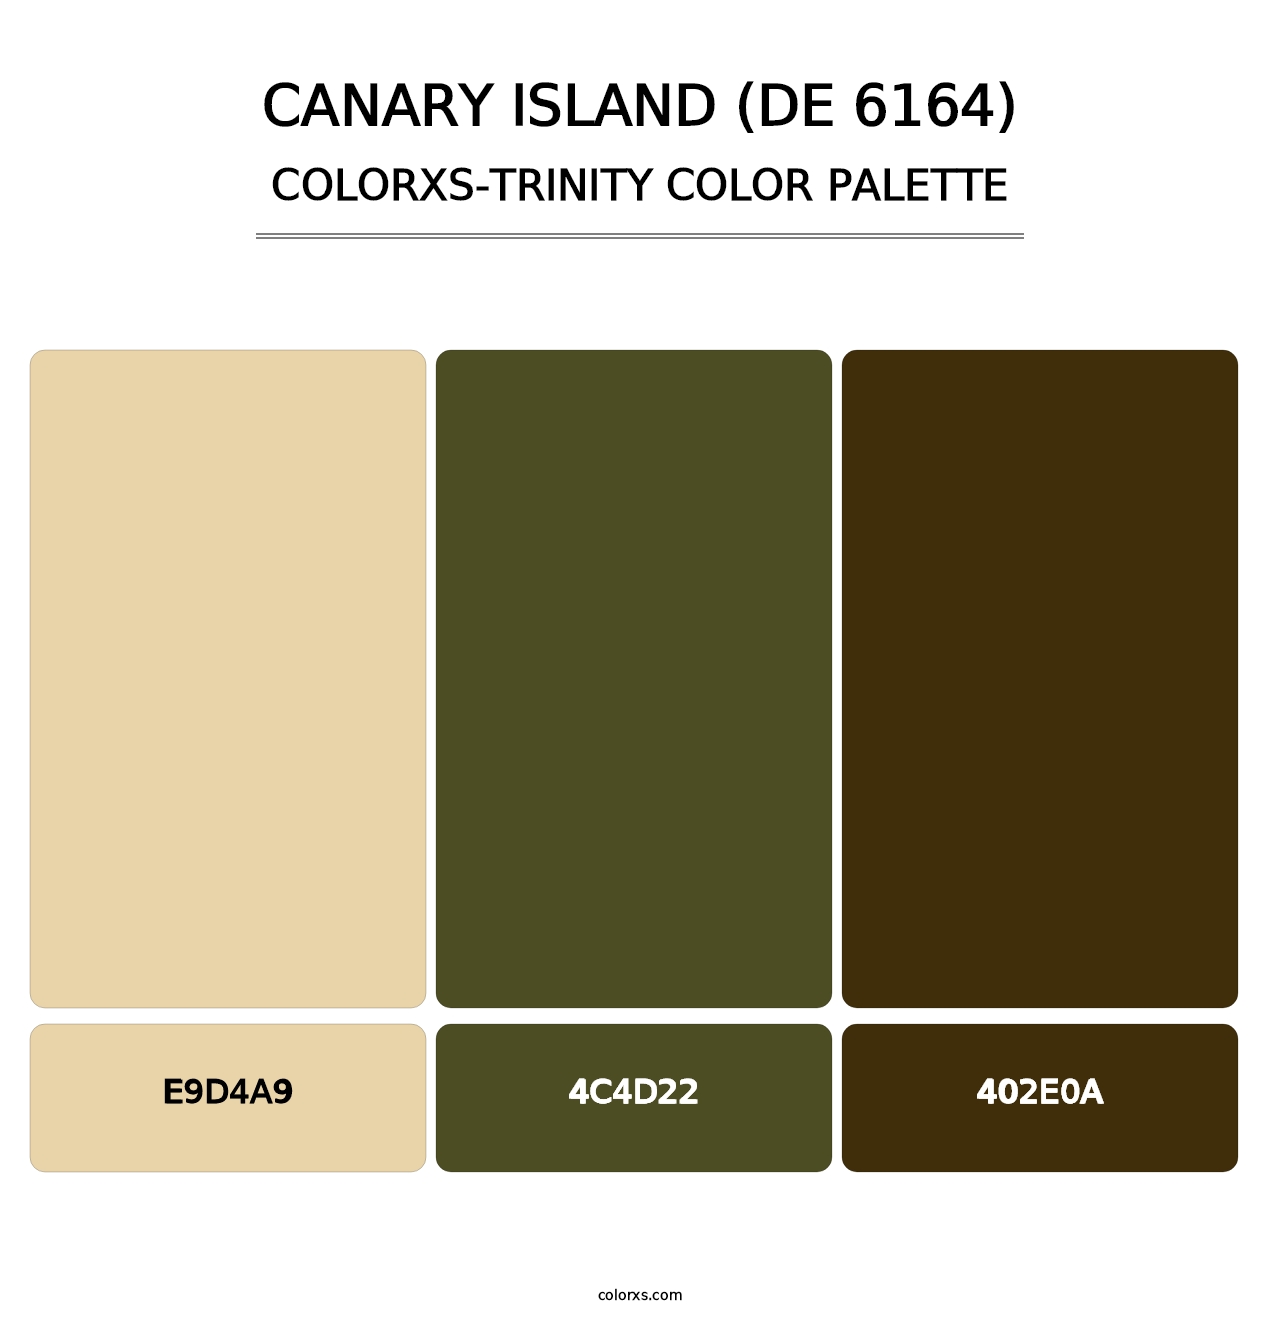 Canary Island (DE 6164) - Colorxs Trinity Palette